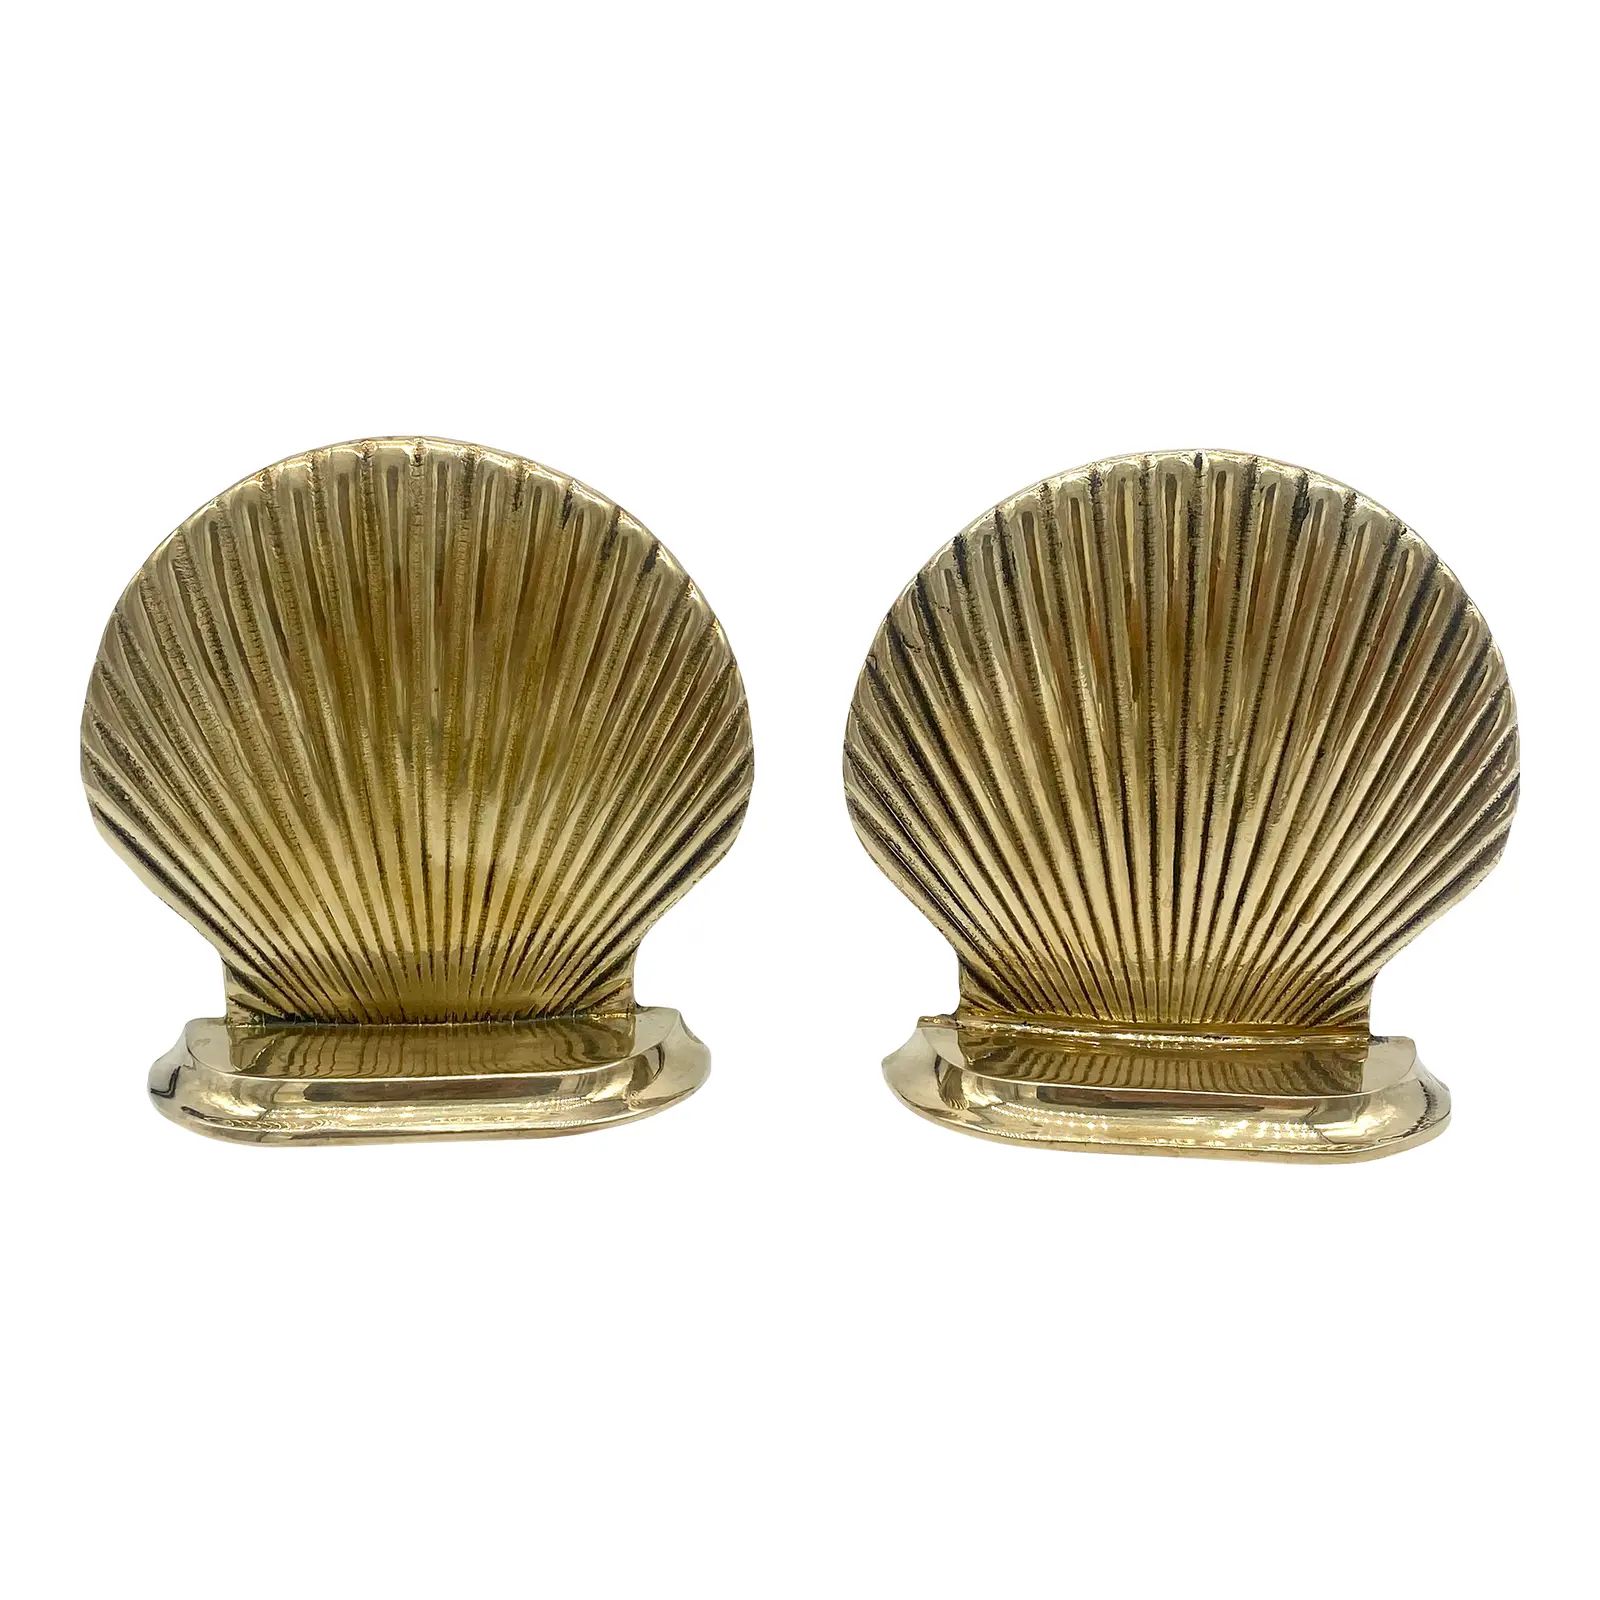 Brass Shell Bookends - a Pair | Chairish